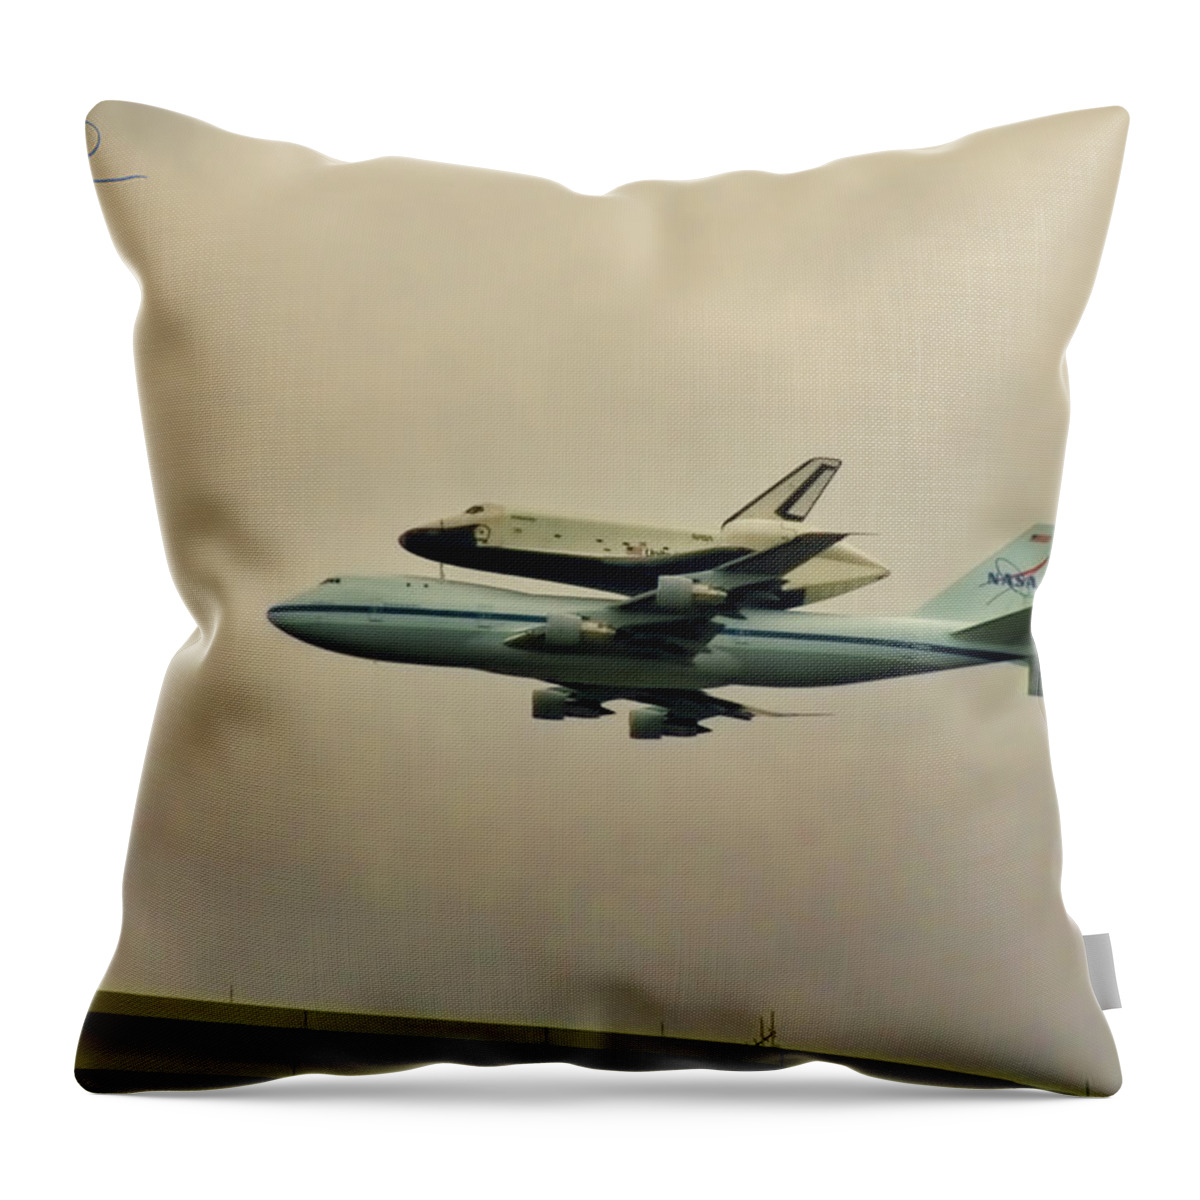 Ssv Throw Pillow featuring the photograph Enterprise 9 by S Paul Sahm